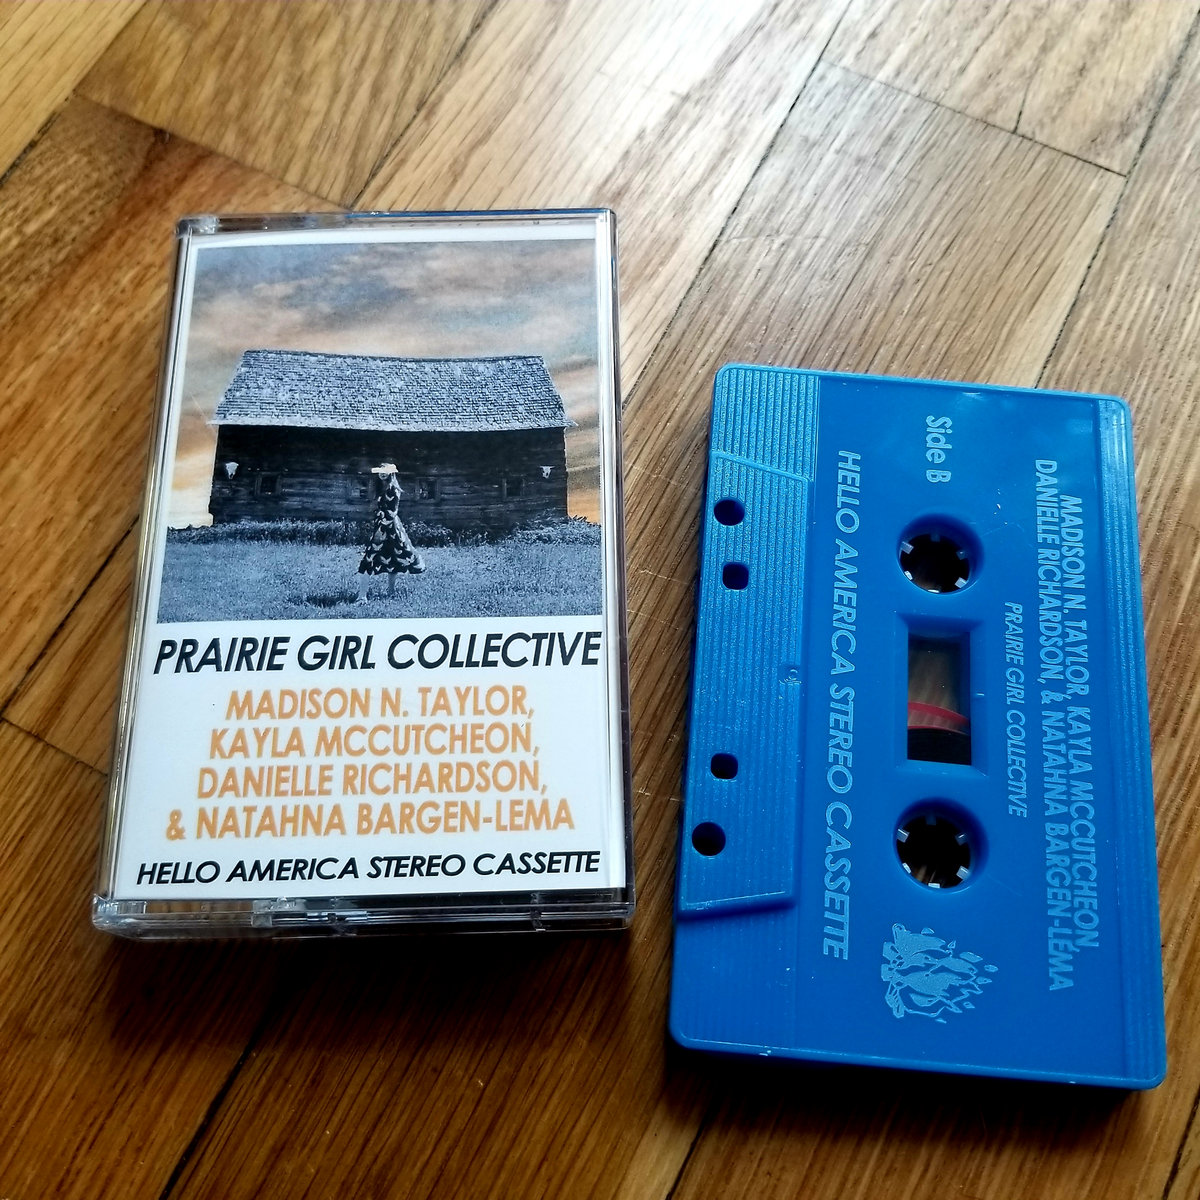 Prairie Girl Collective cassette